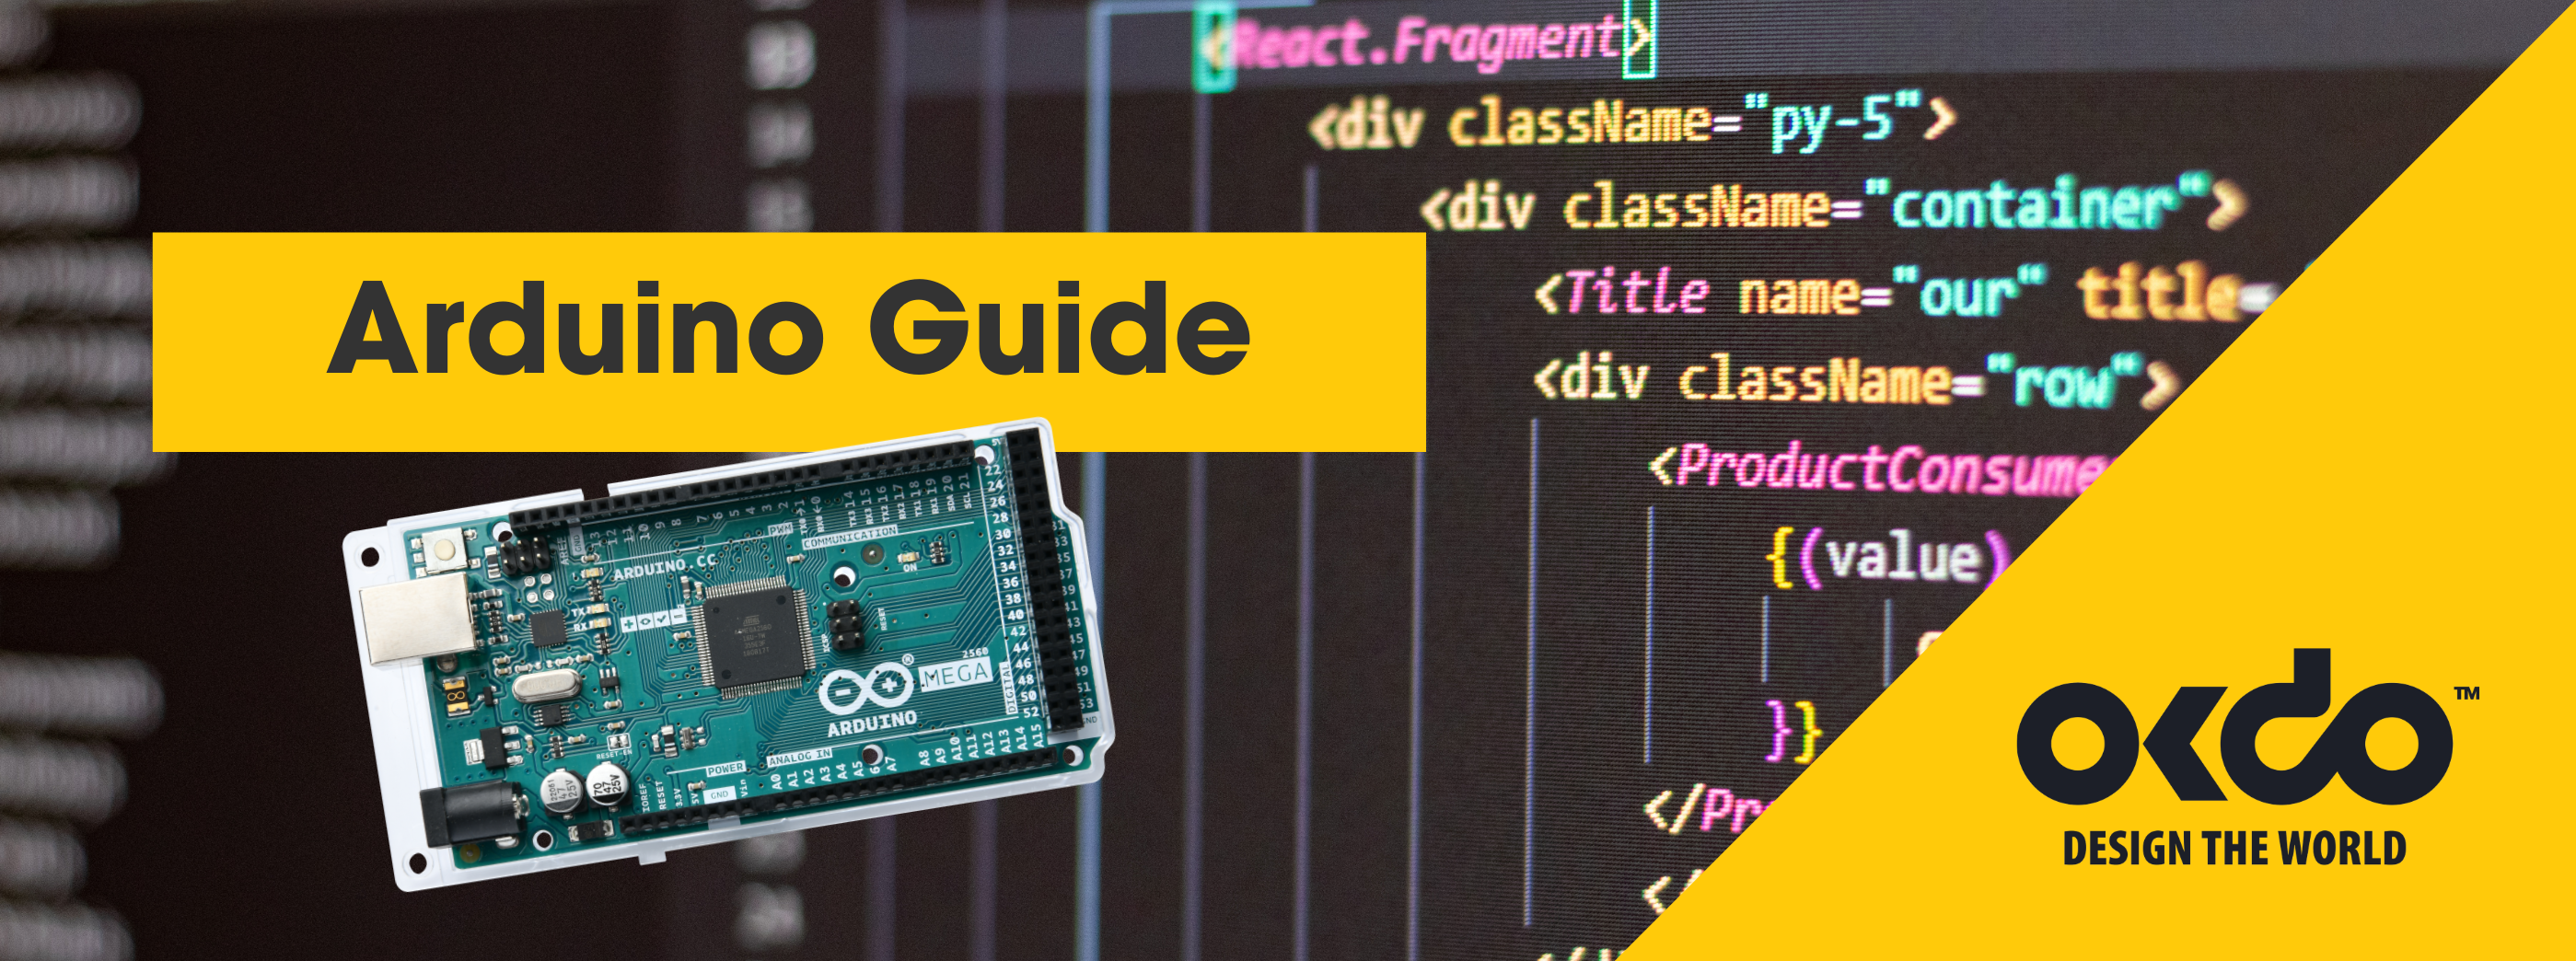 Arduino Guide Blog Header Image